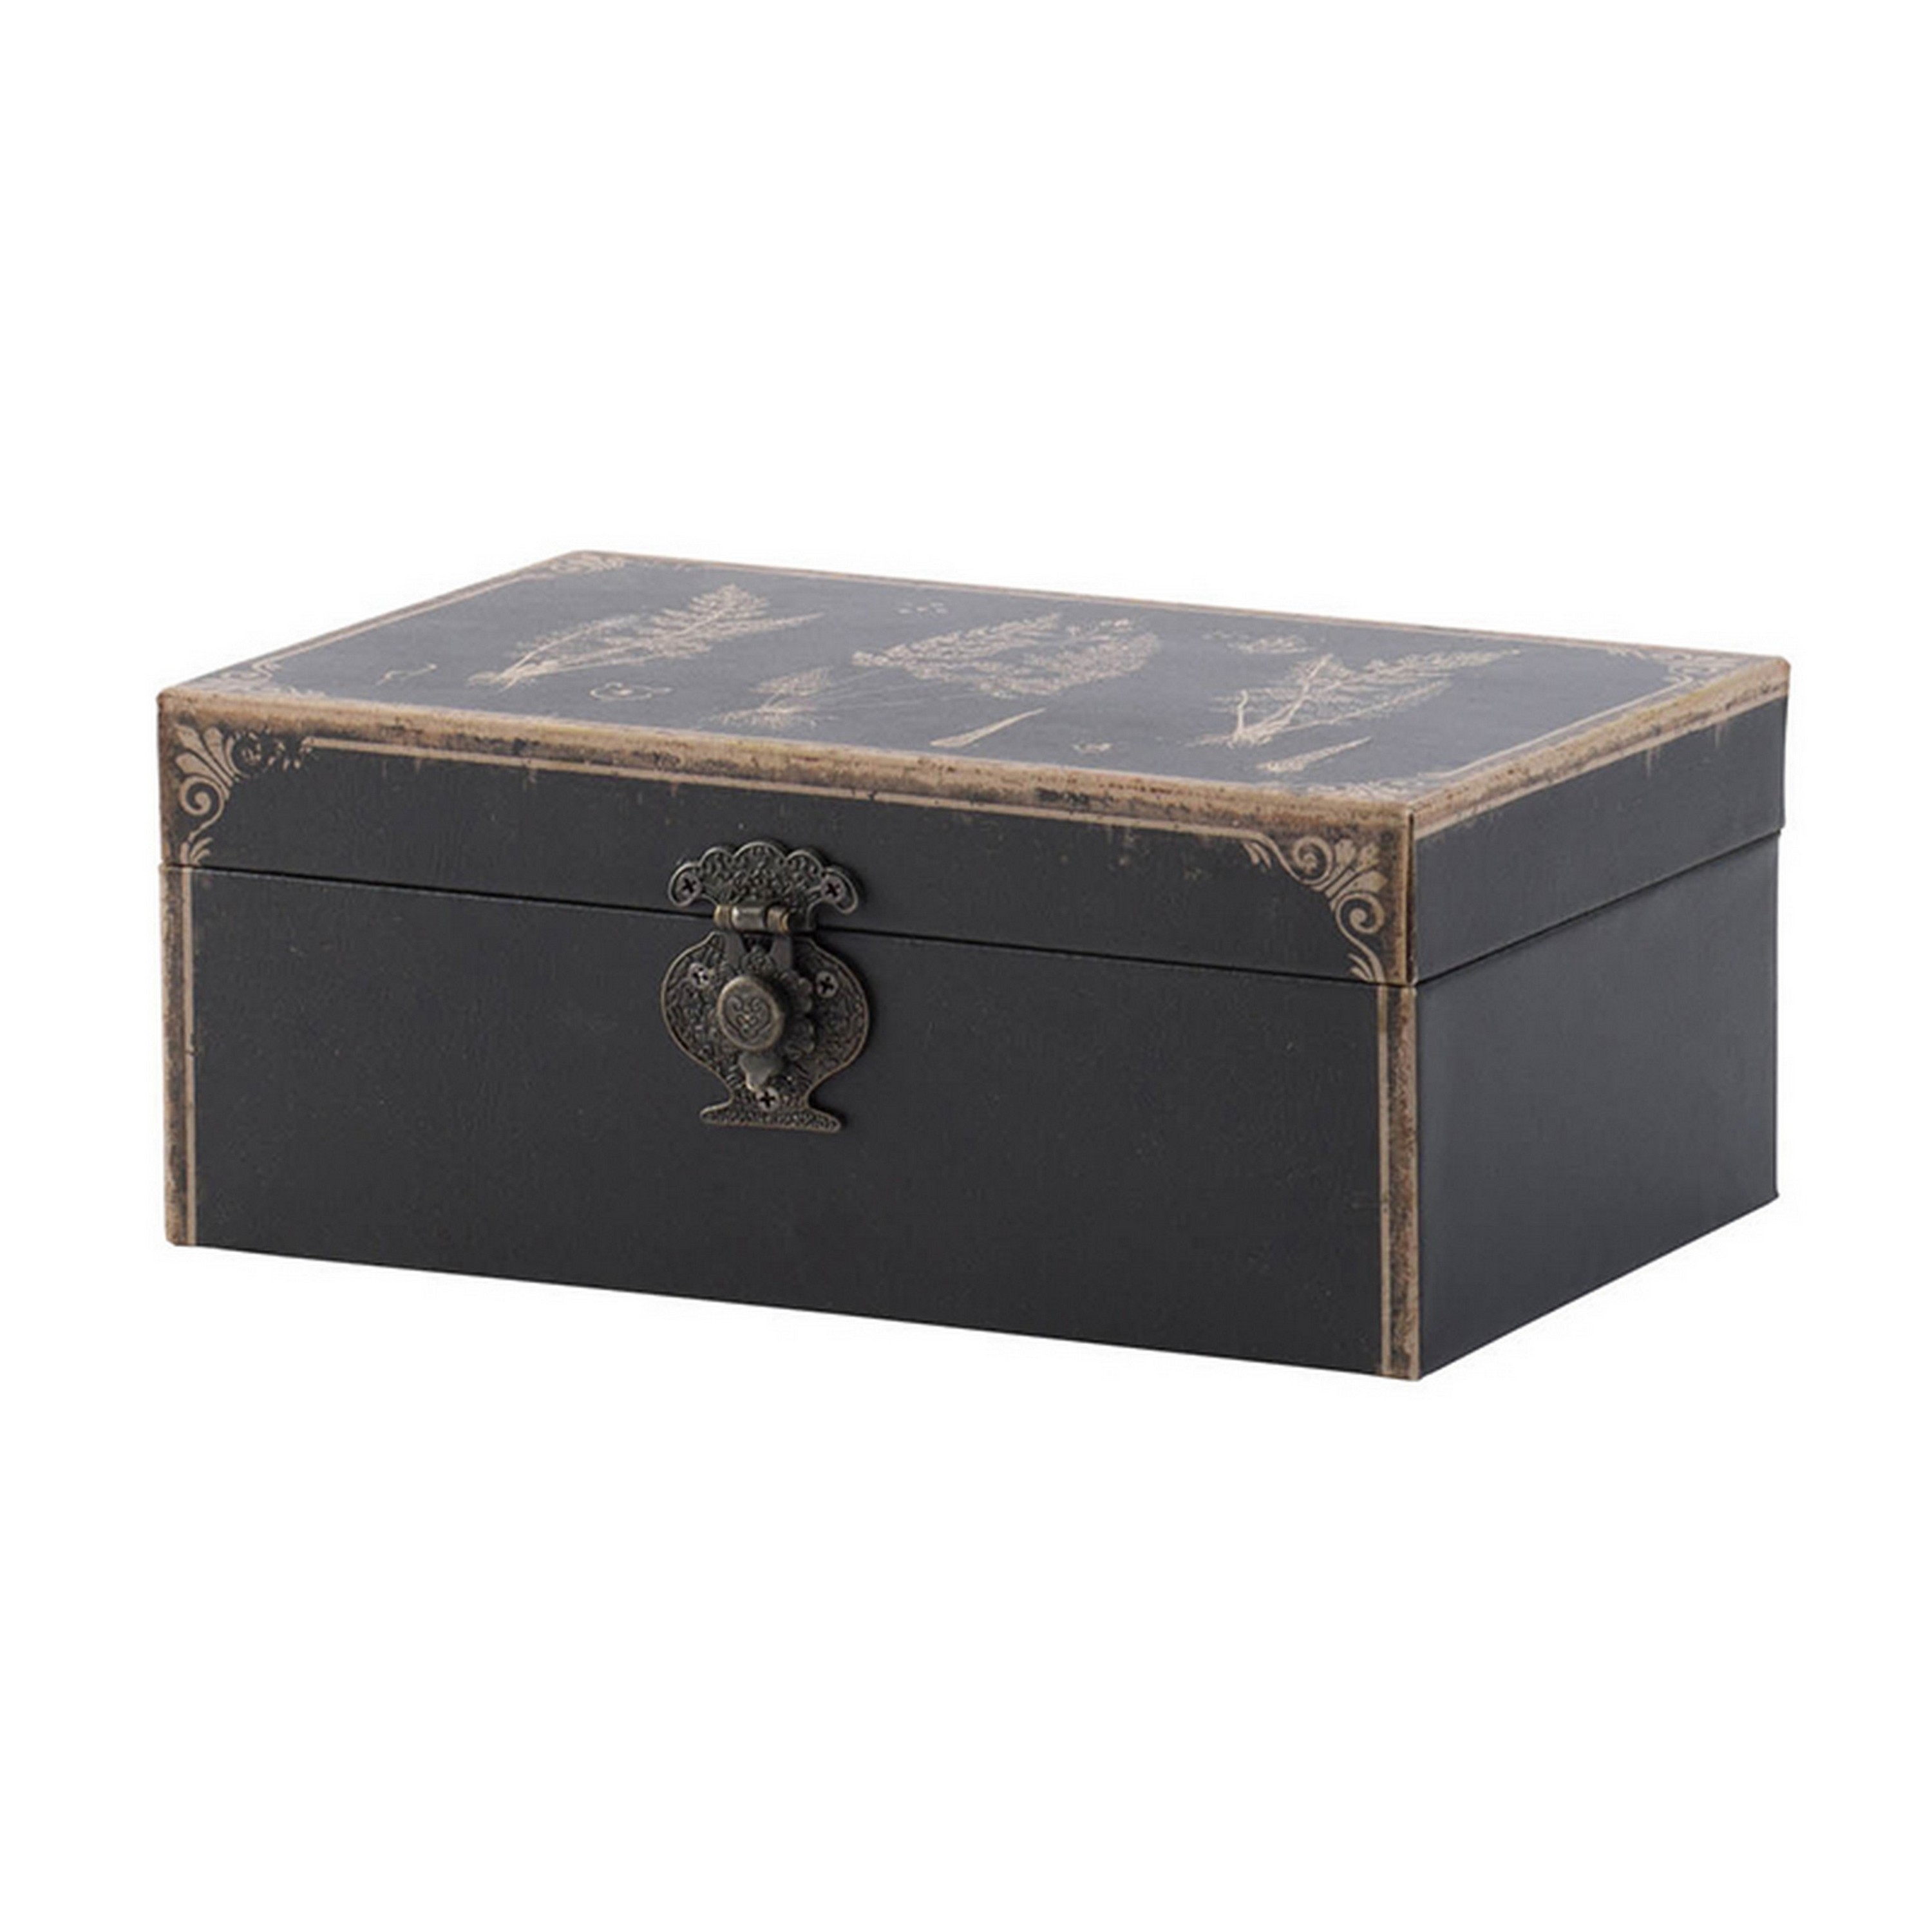 Leo Set Of 3 Storage Boxes, Vegan Leather Lining, Ornate Printed Designs- Saltoro Sherpi